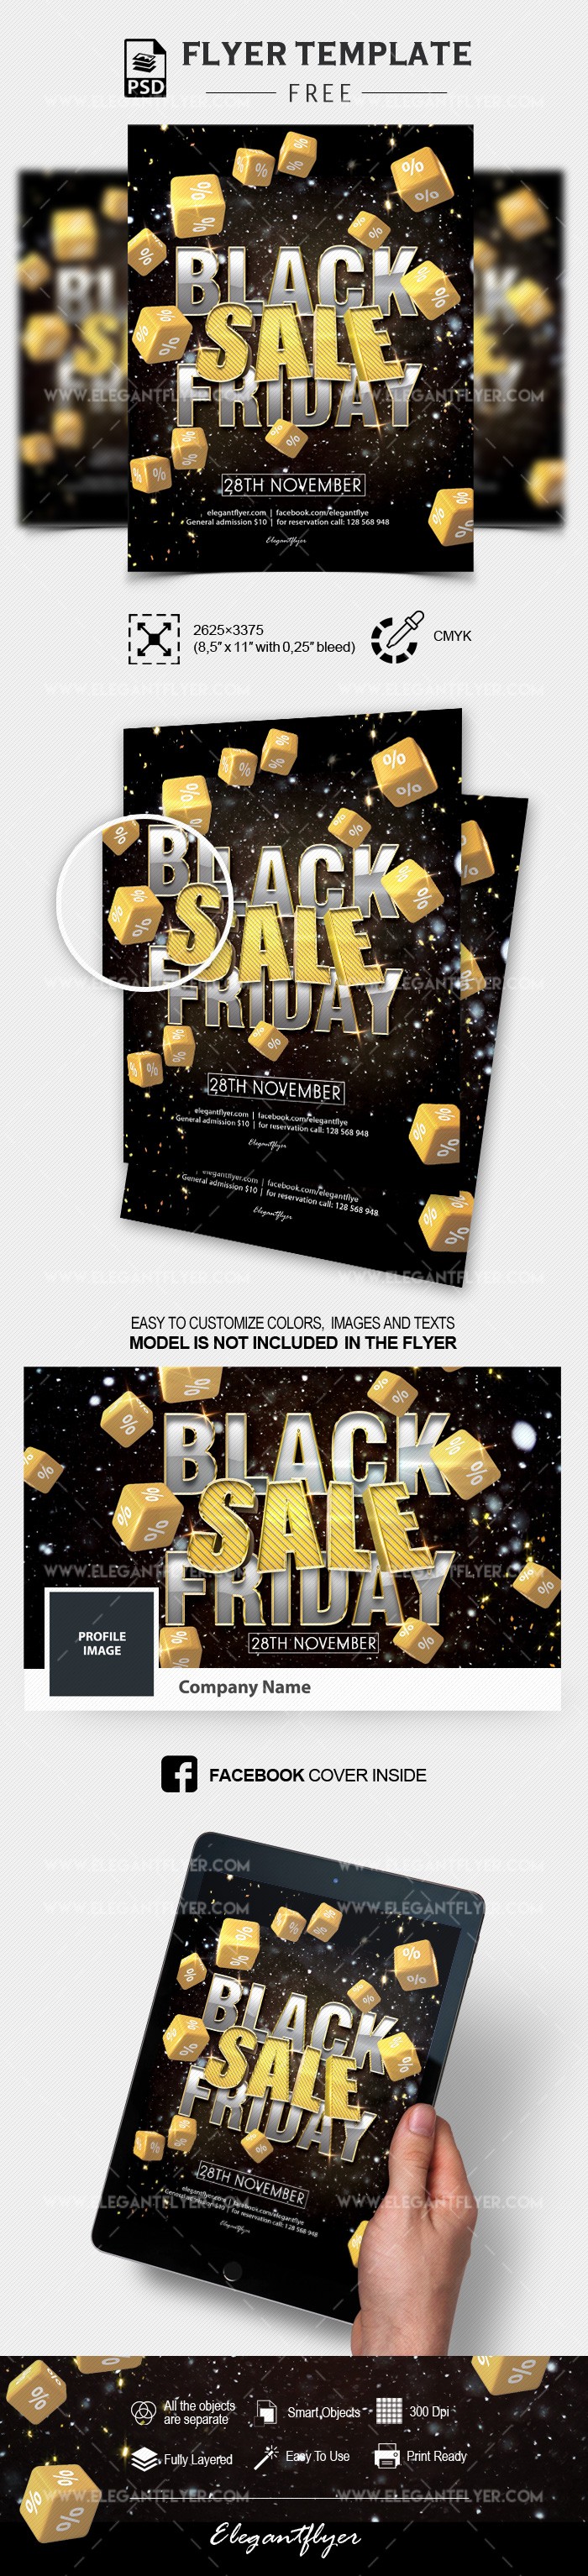 Black Friday Sale by ElegantFlyer